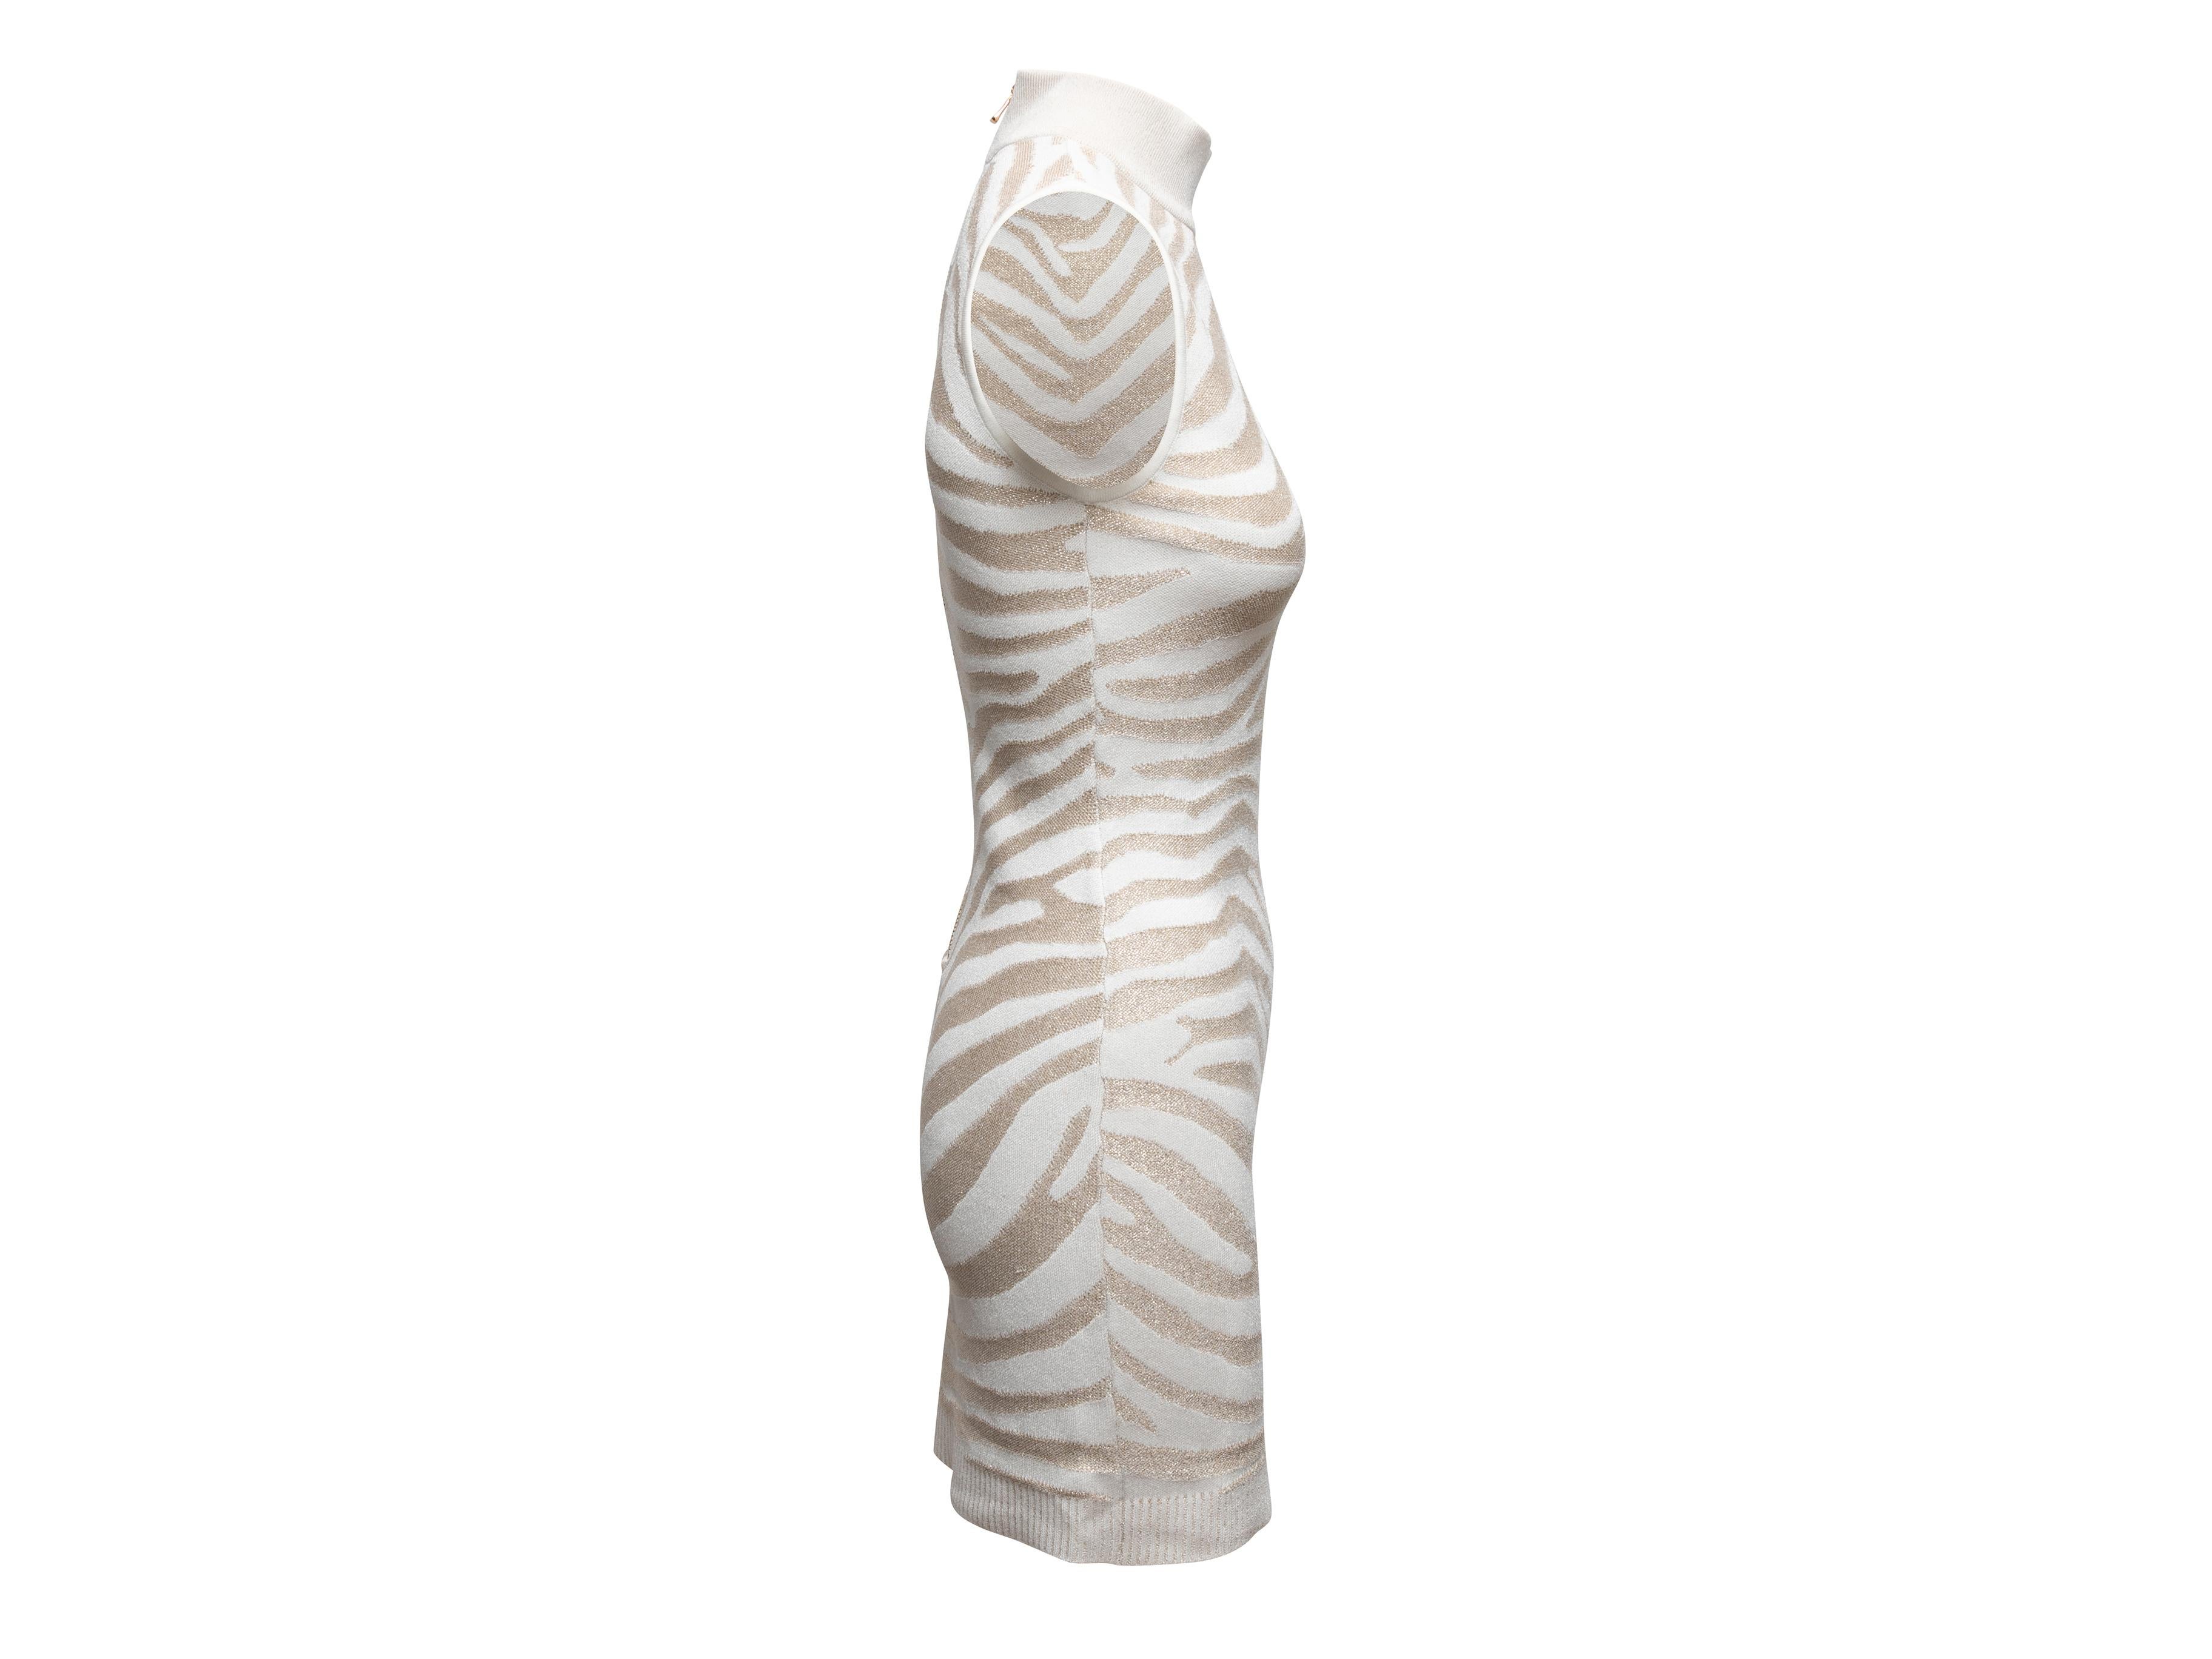 White and gold zebra patterned sleeveless knit dress by Balmain. Mock neck. Zip closure at center back. 30